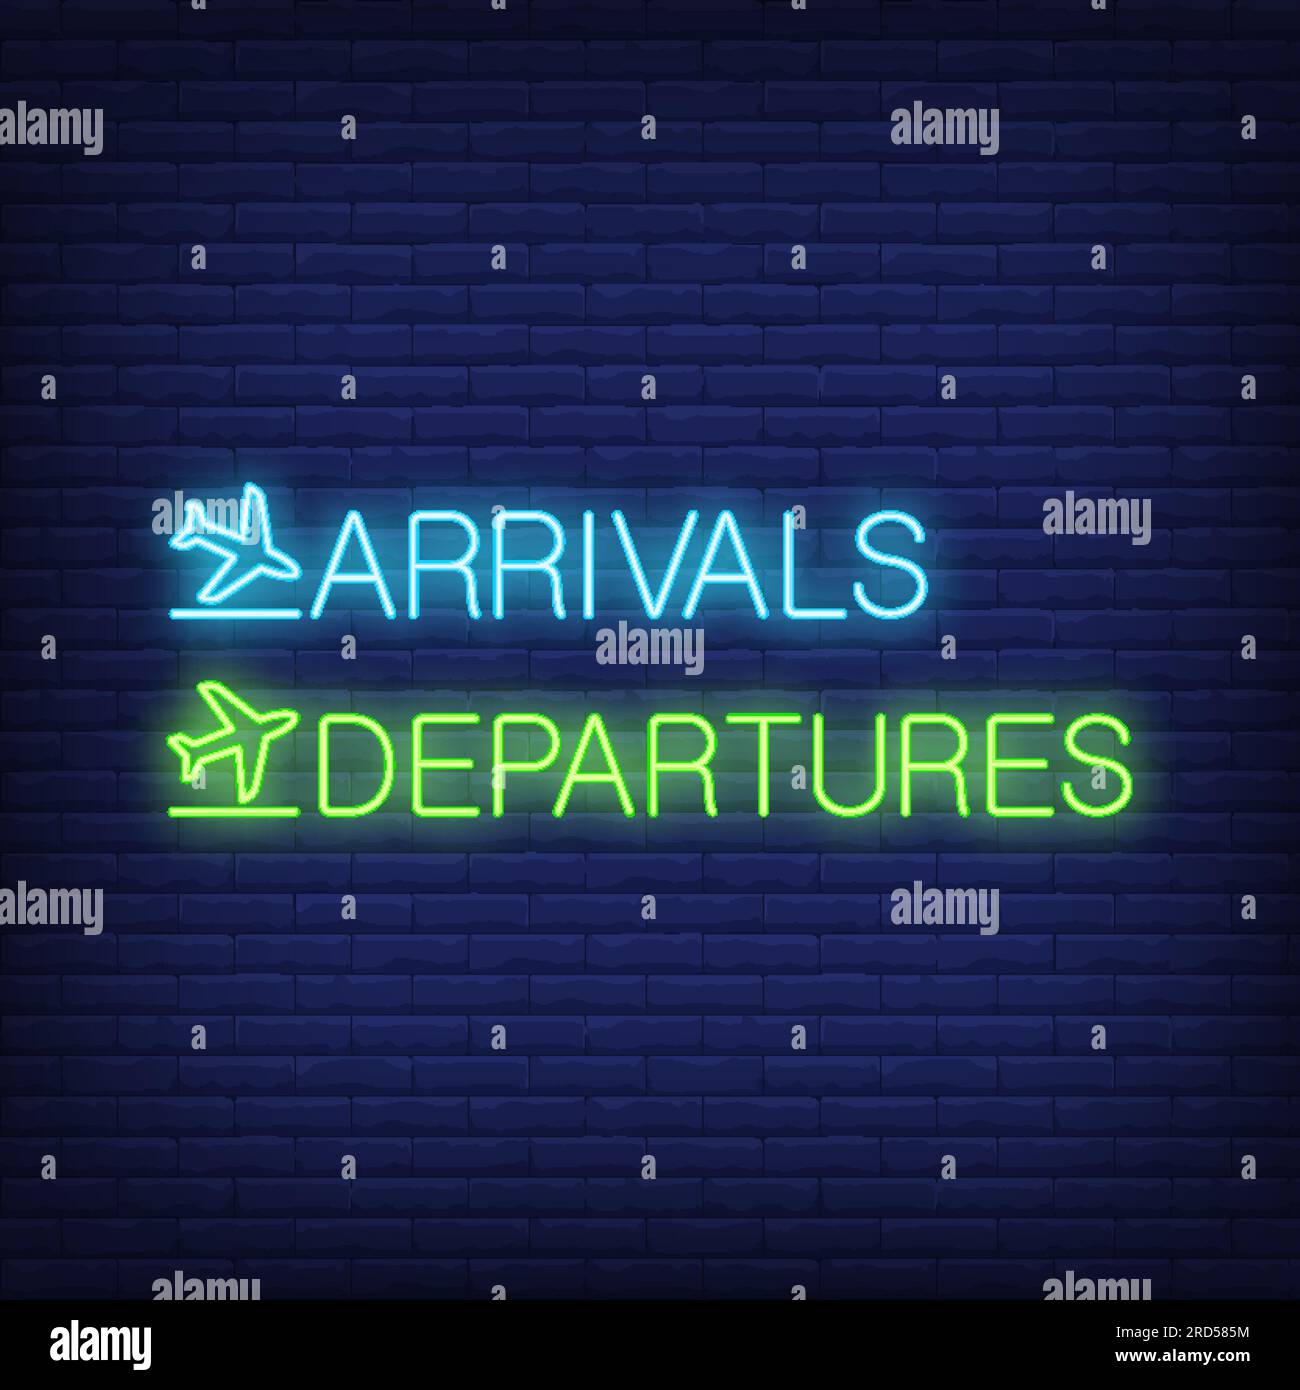 Arrivals and departures neon sign Stock Vector